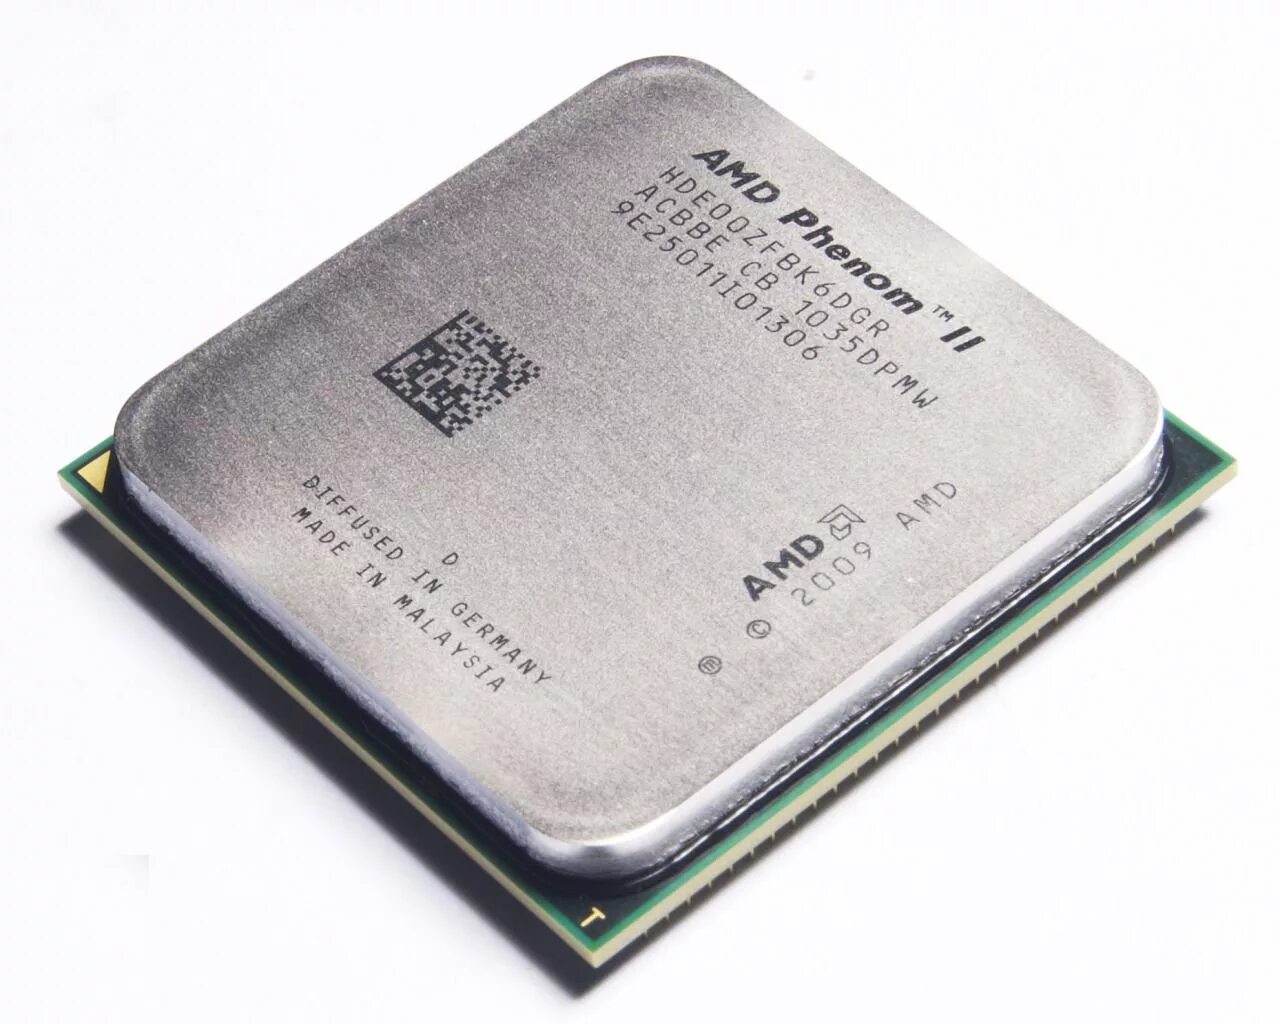 Процессор Phenom II x6. Процессор AMD Phenom II x6 1055t. Phenom II x6 1100. AMD Phenom II x6 1100t Black Edition процессор.